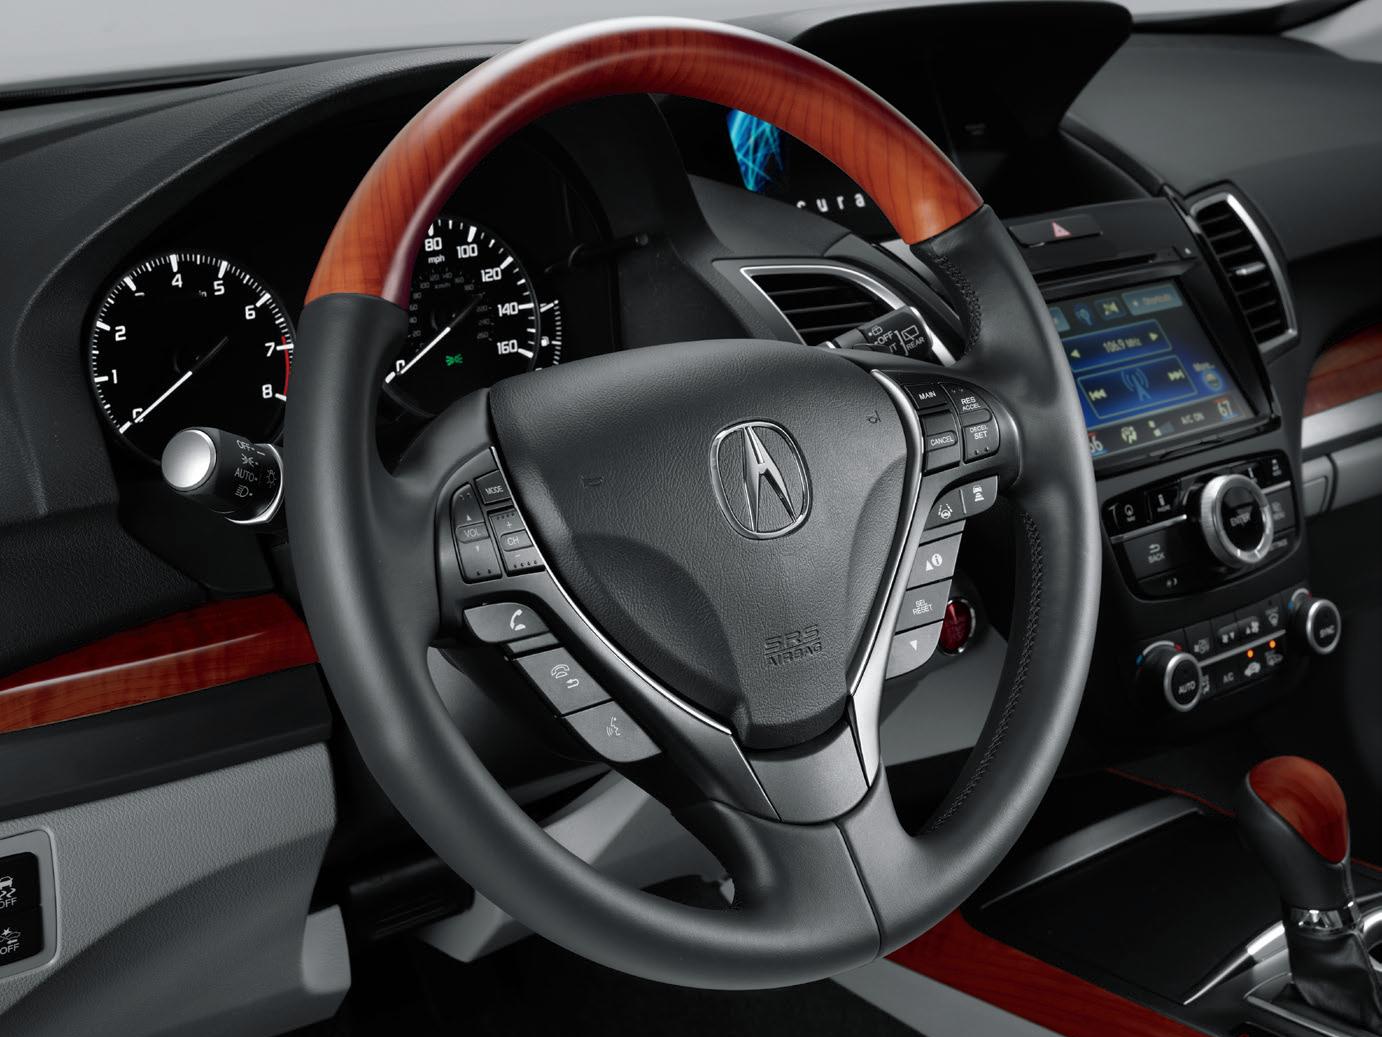 2017 Acura RDX WoodGrain-Look Steering Wheel 08U97-TX4-210